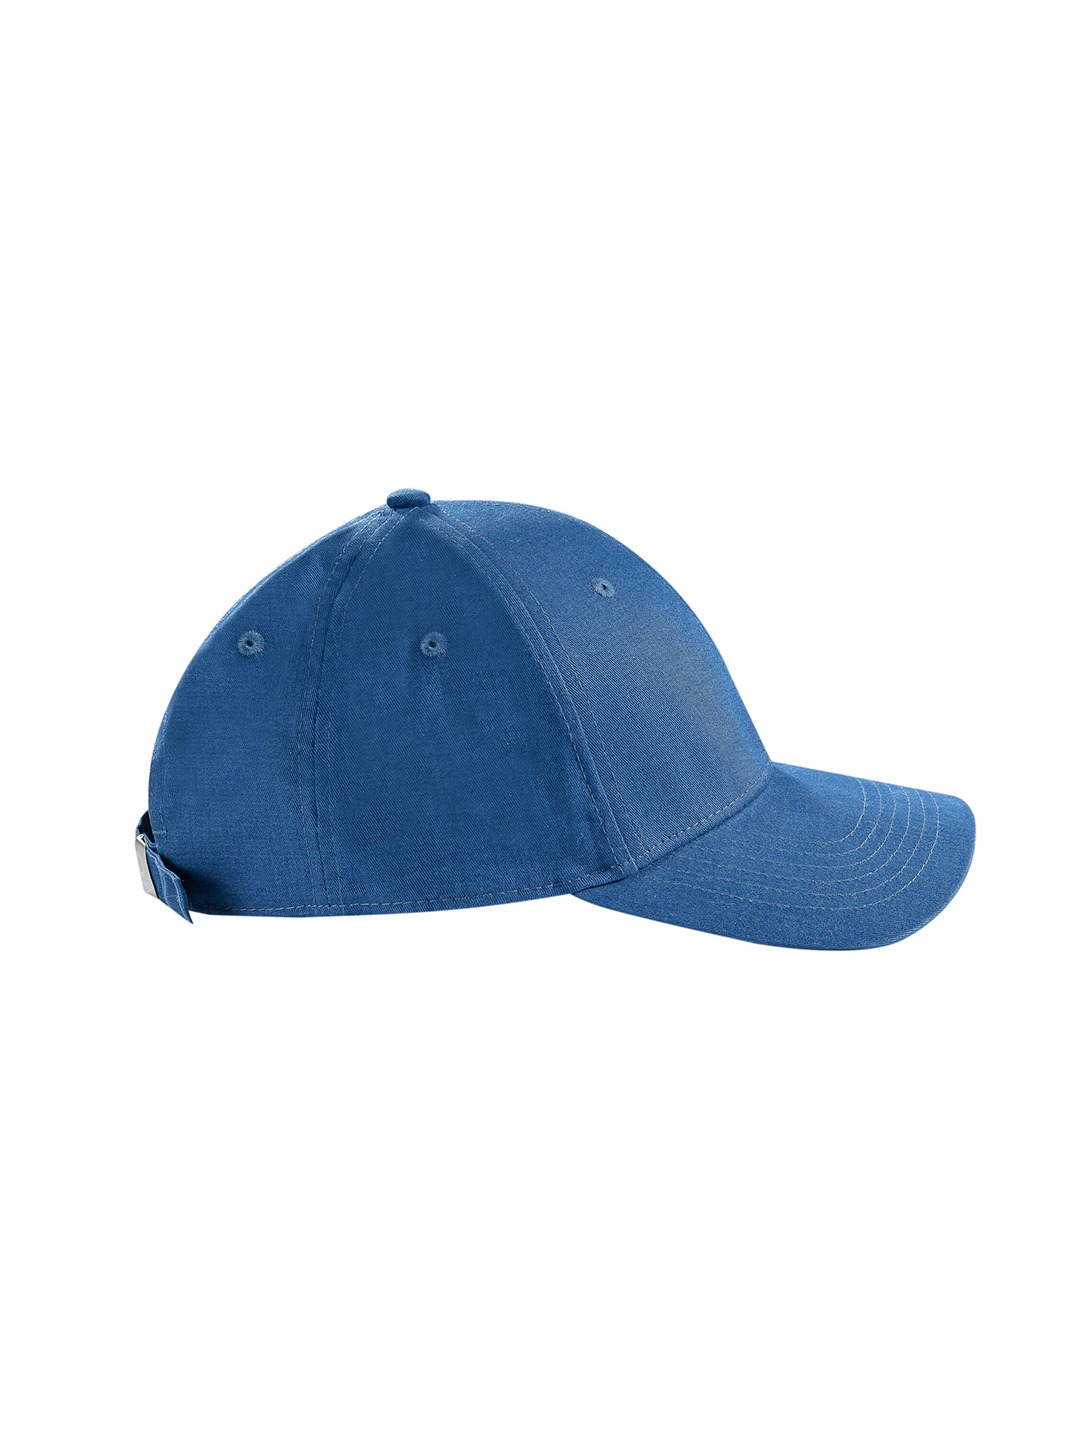 Accessories Caps | Kipsta By Decathlon Unisex Blue Solid Baseball Cap - DT76512